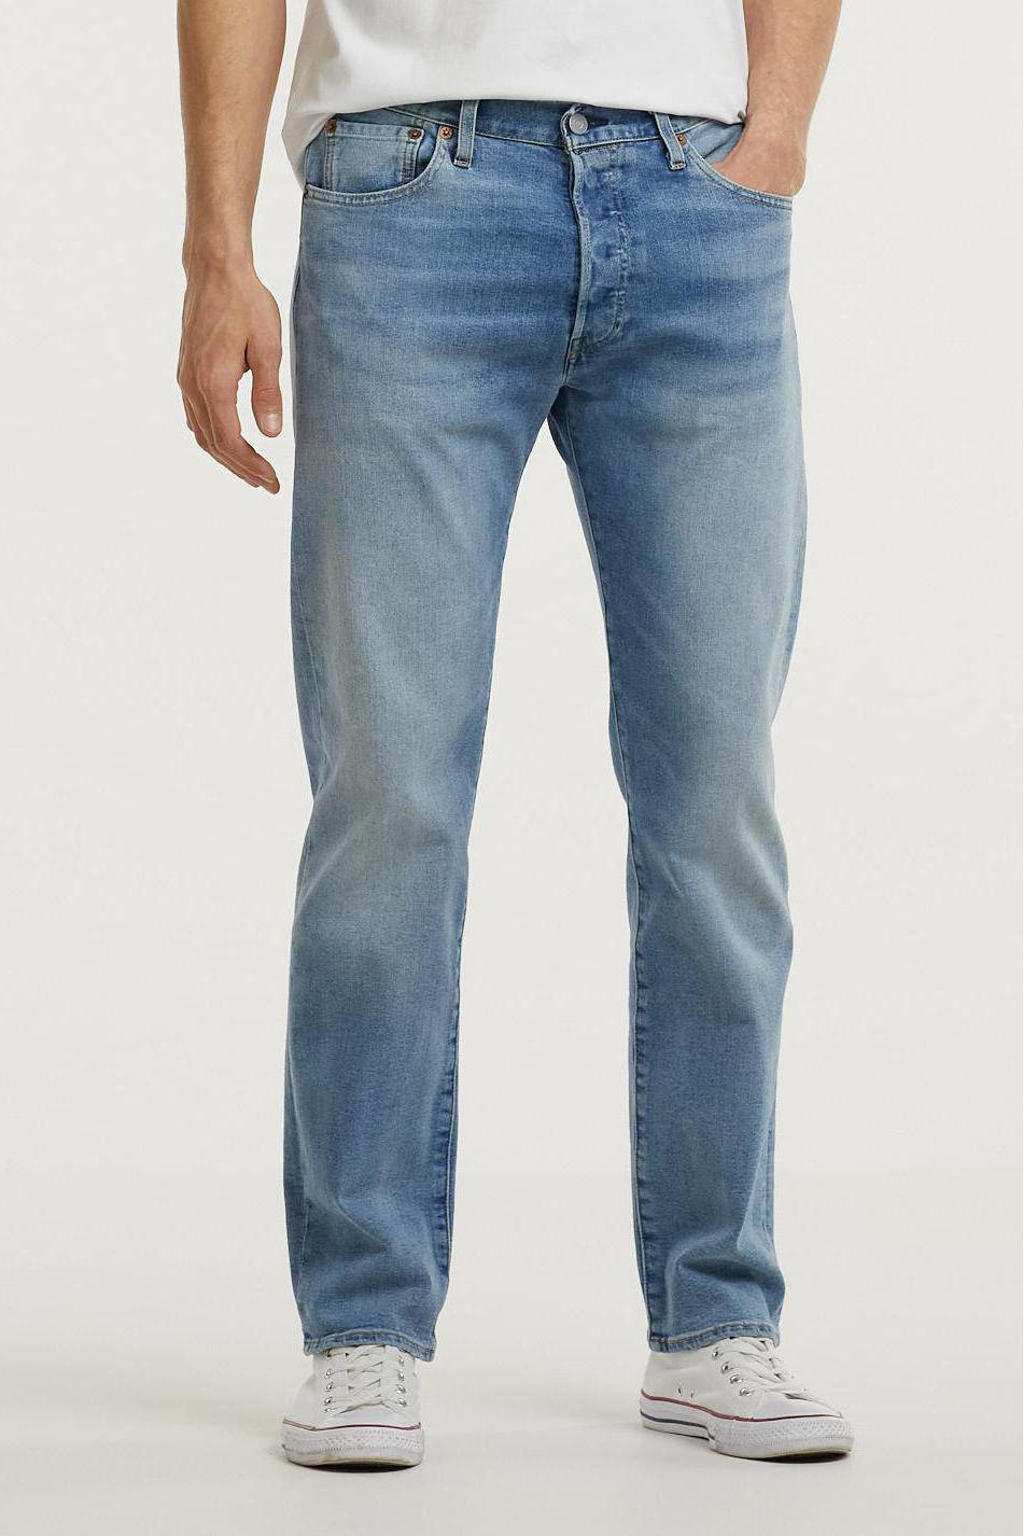 Levi's 501 regular fit jeans sliders